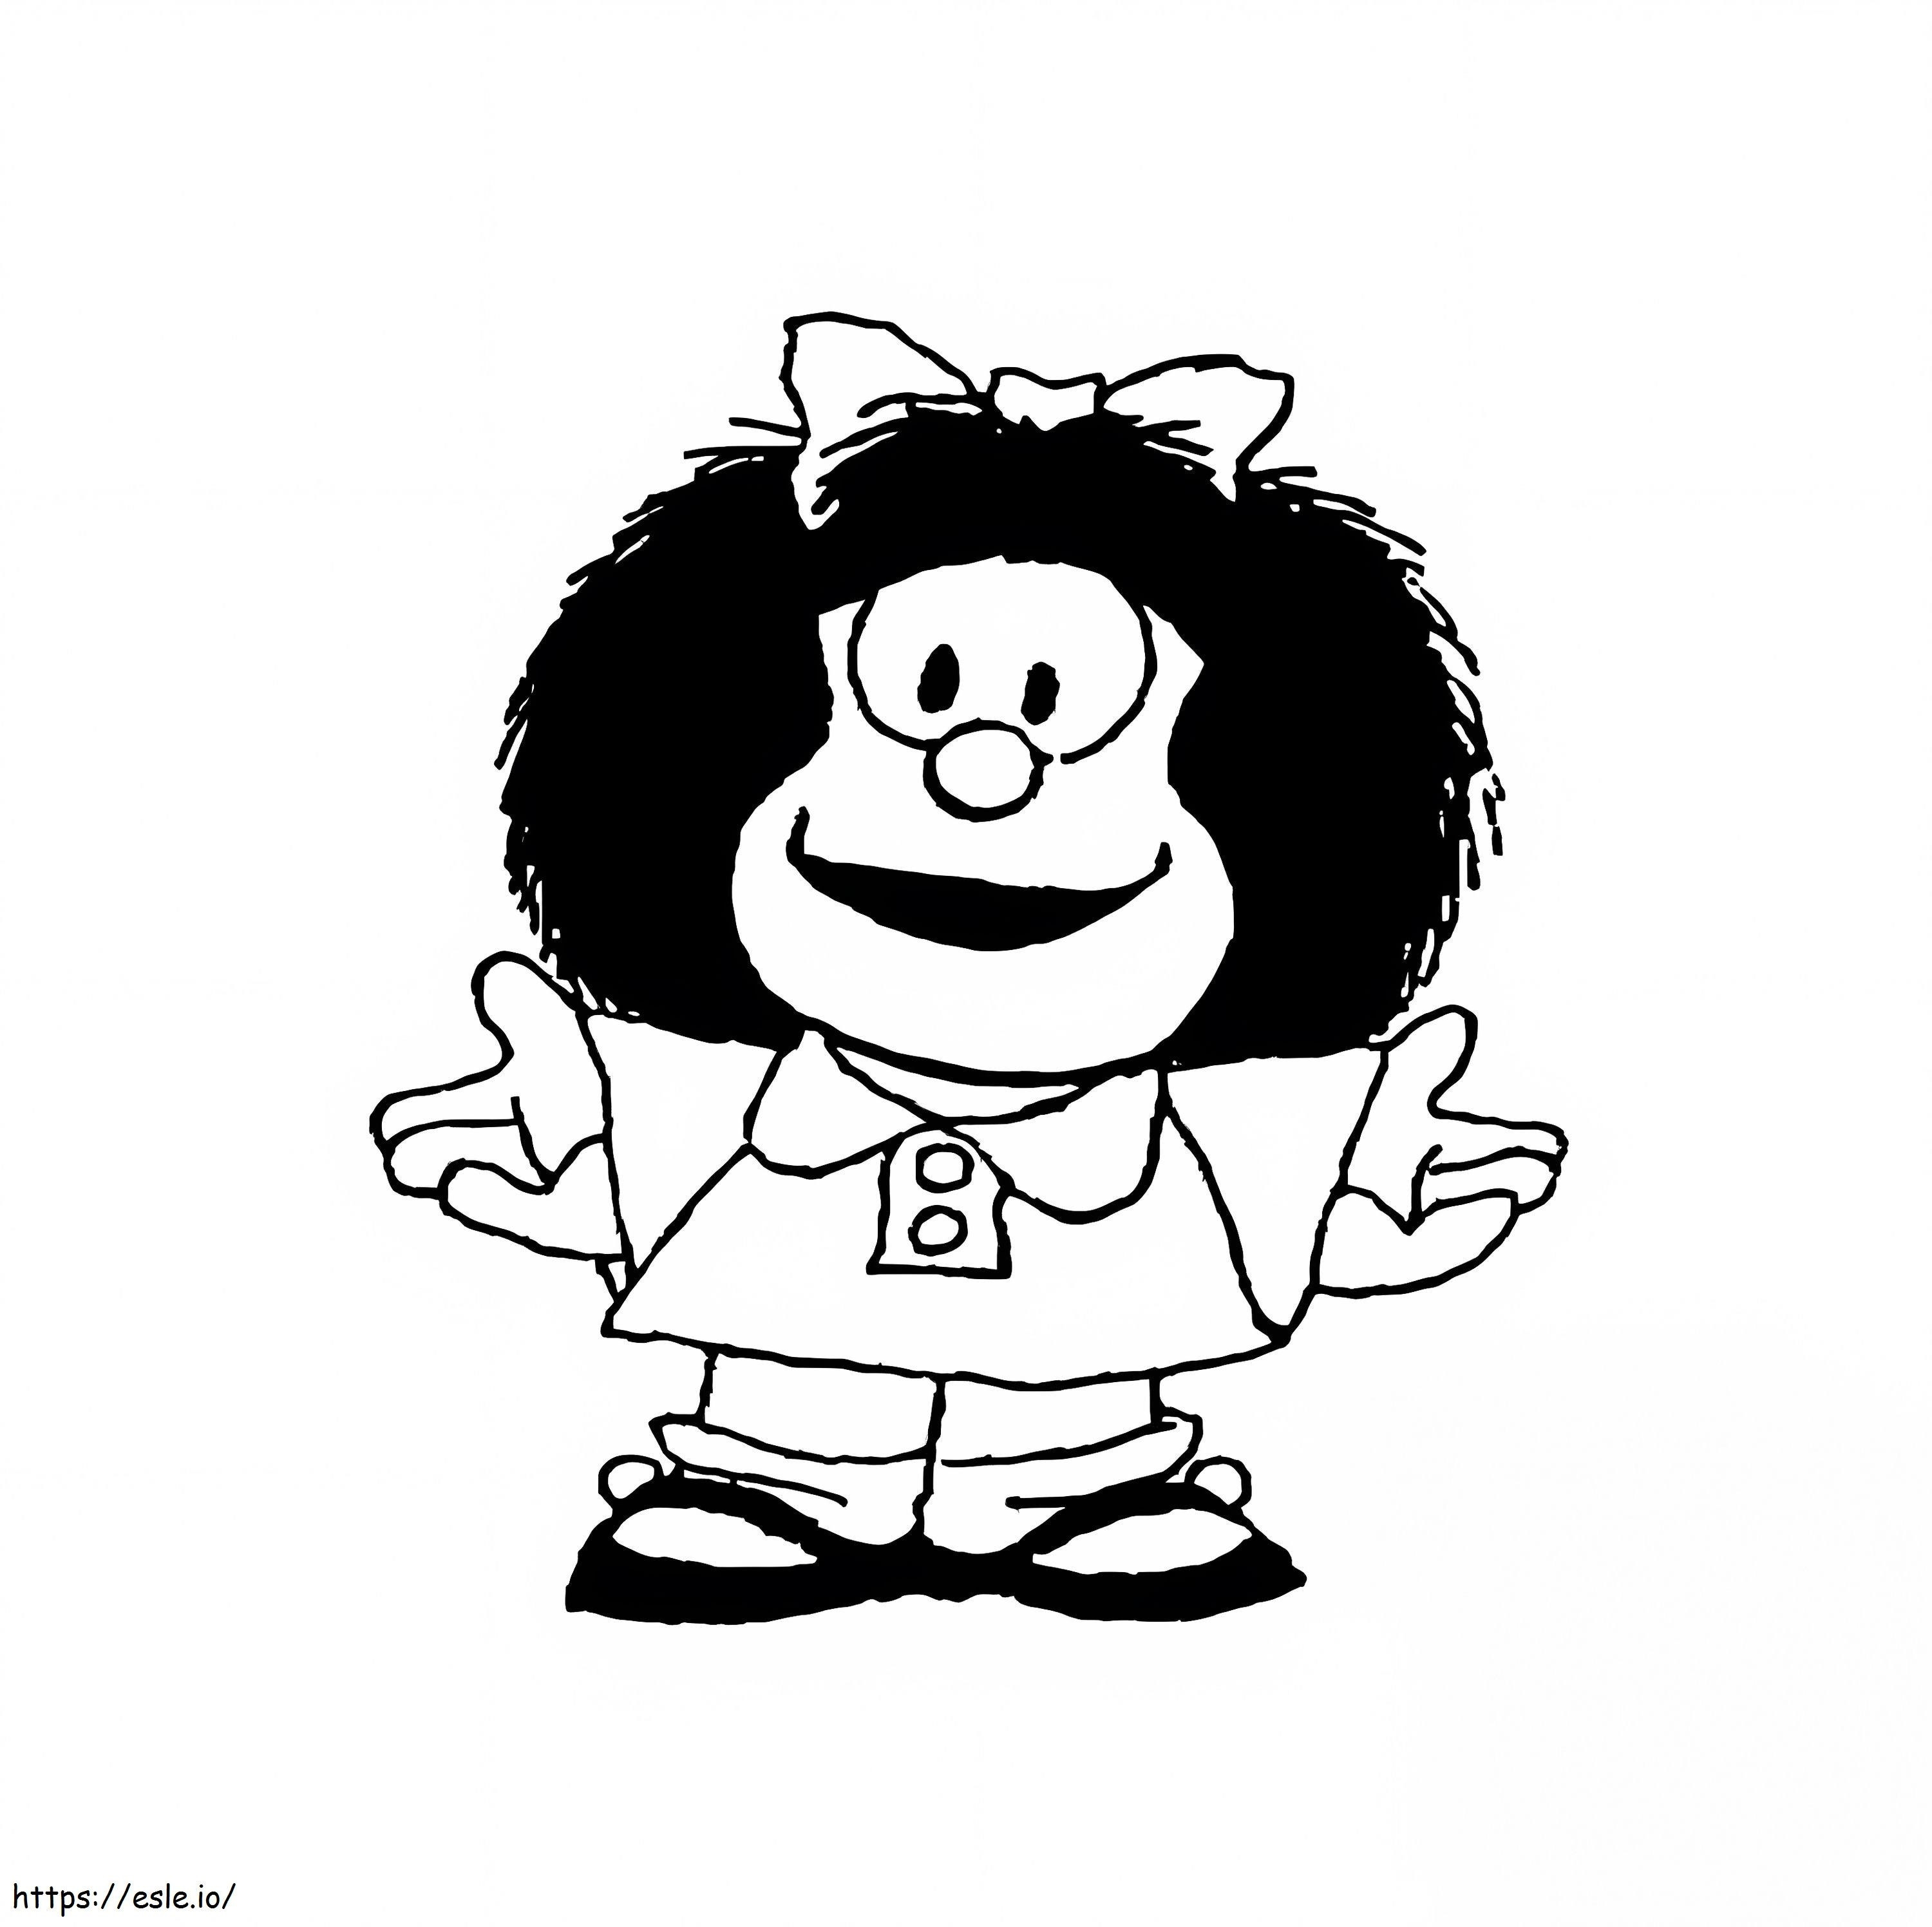 Mafalda coloring page